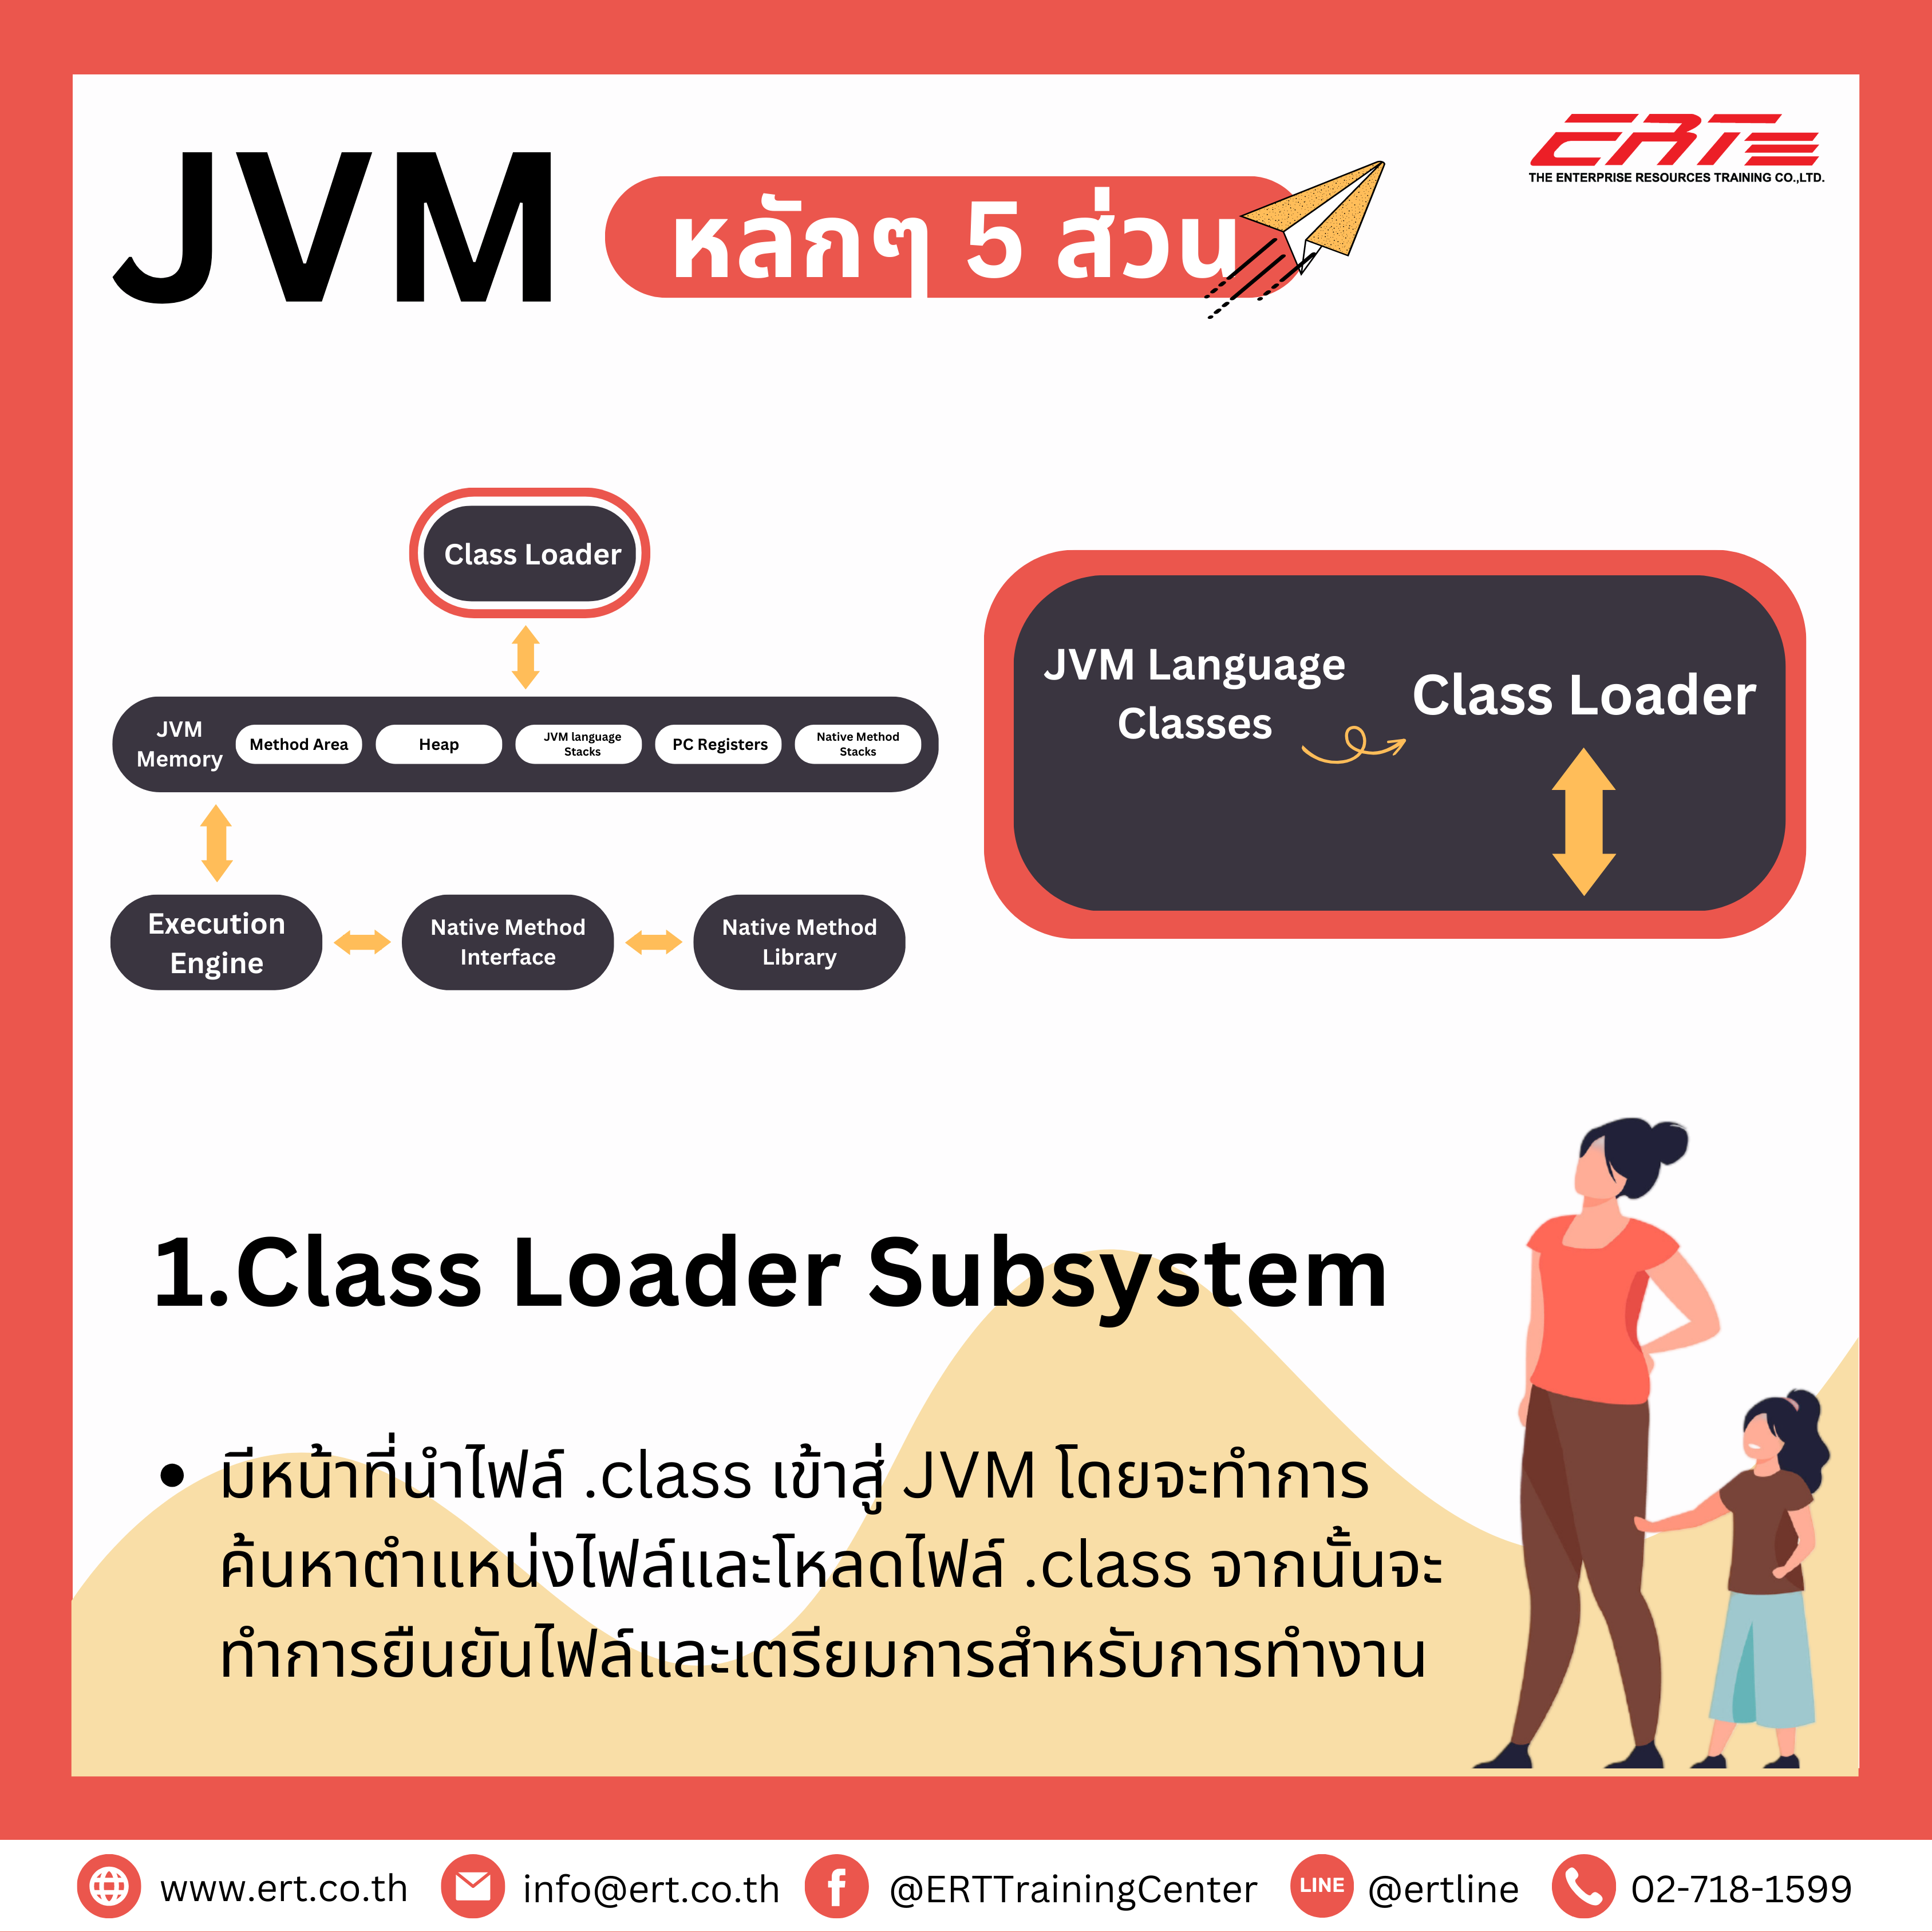 JVM คืออะไร